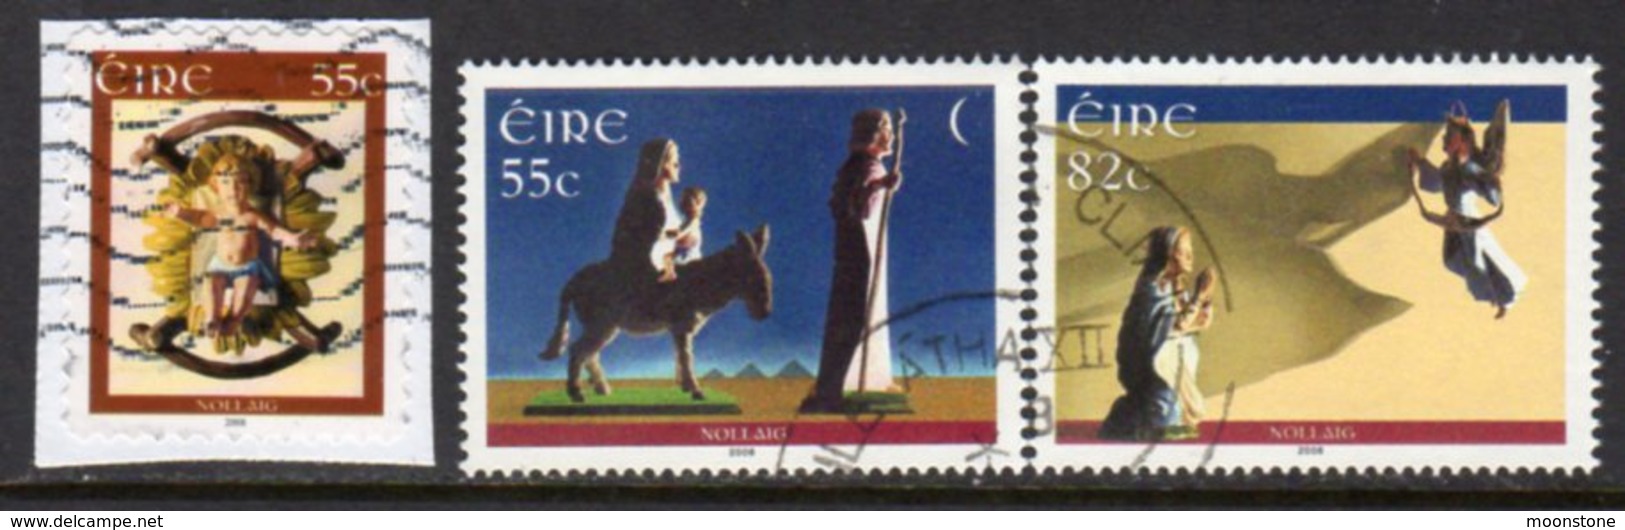 Ireland 2008 Christmas Set Of 3, Used, SG 1926/8 - Used Stamps